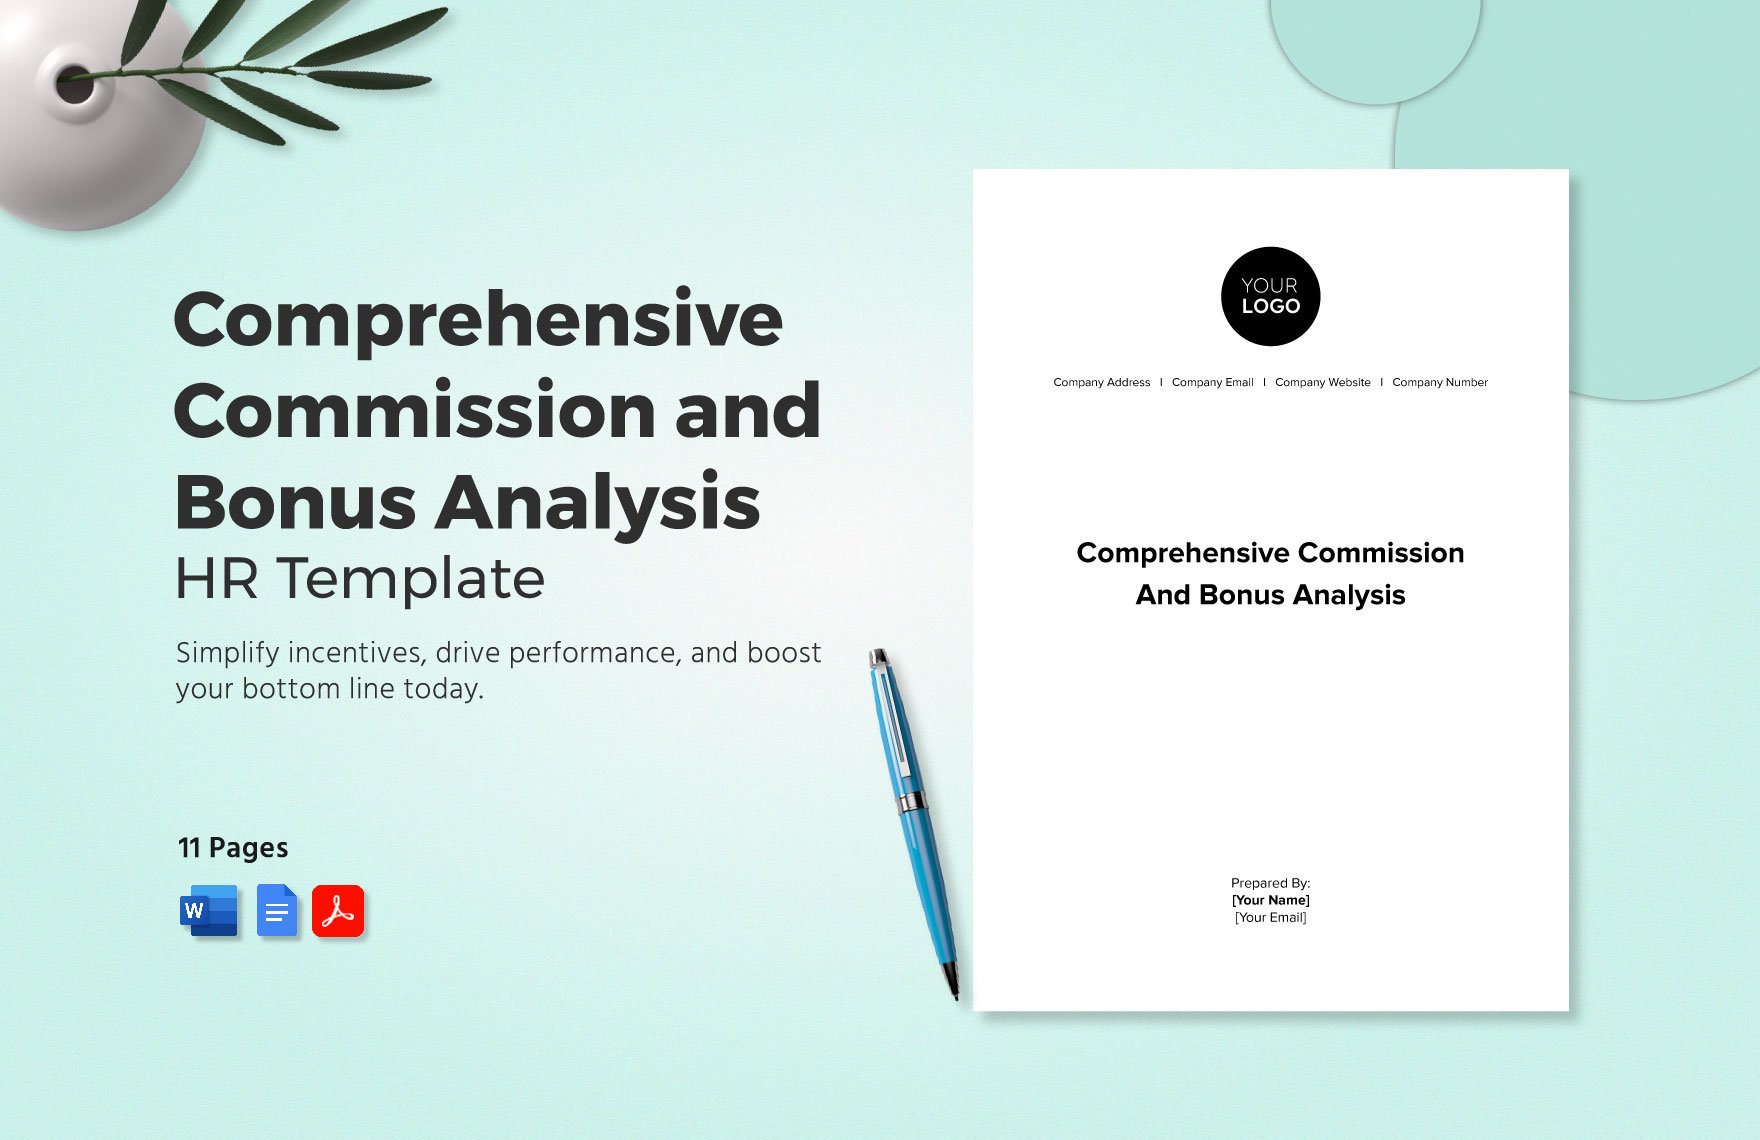 Comprehensive Commission and Bonus Analysis HR Template